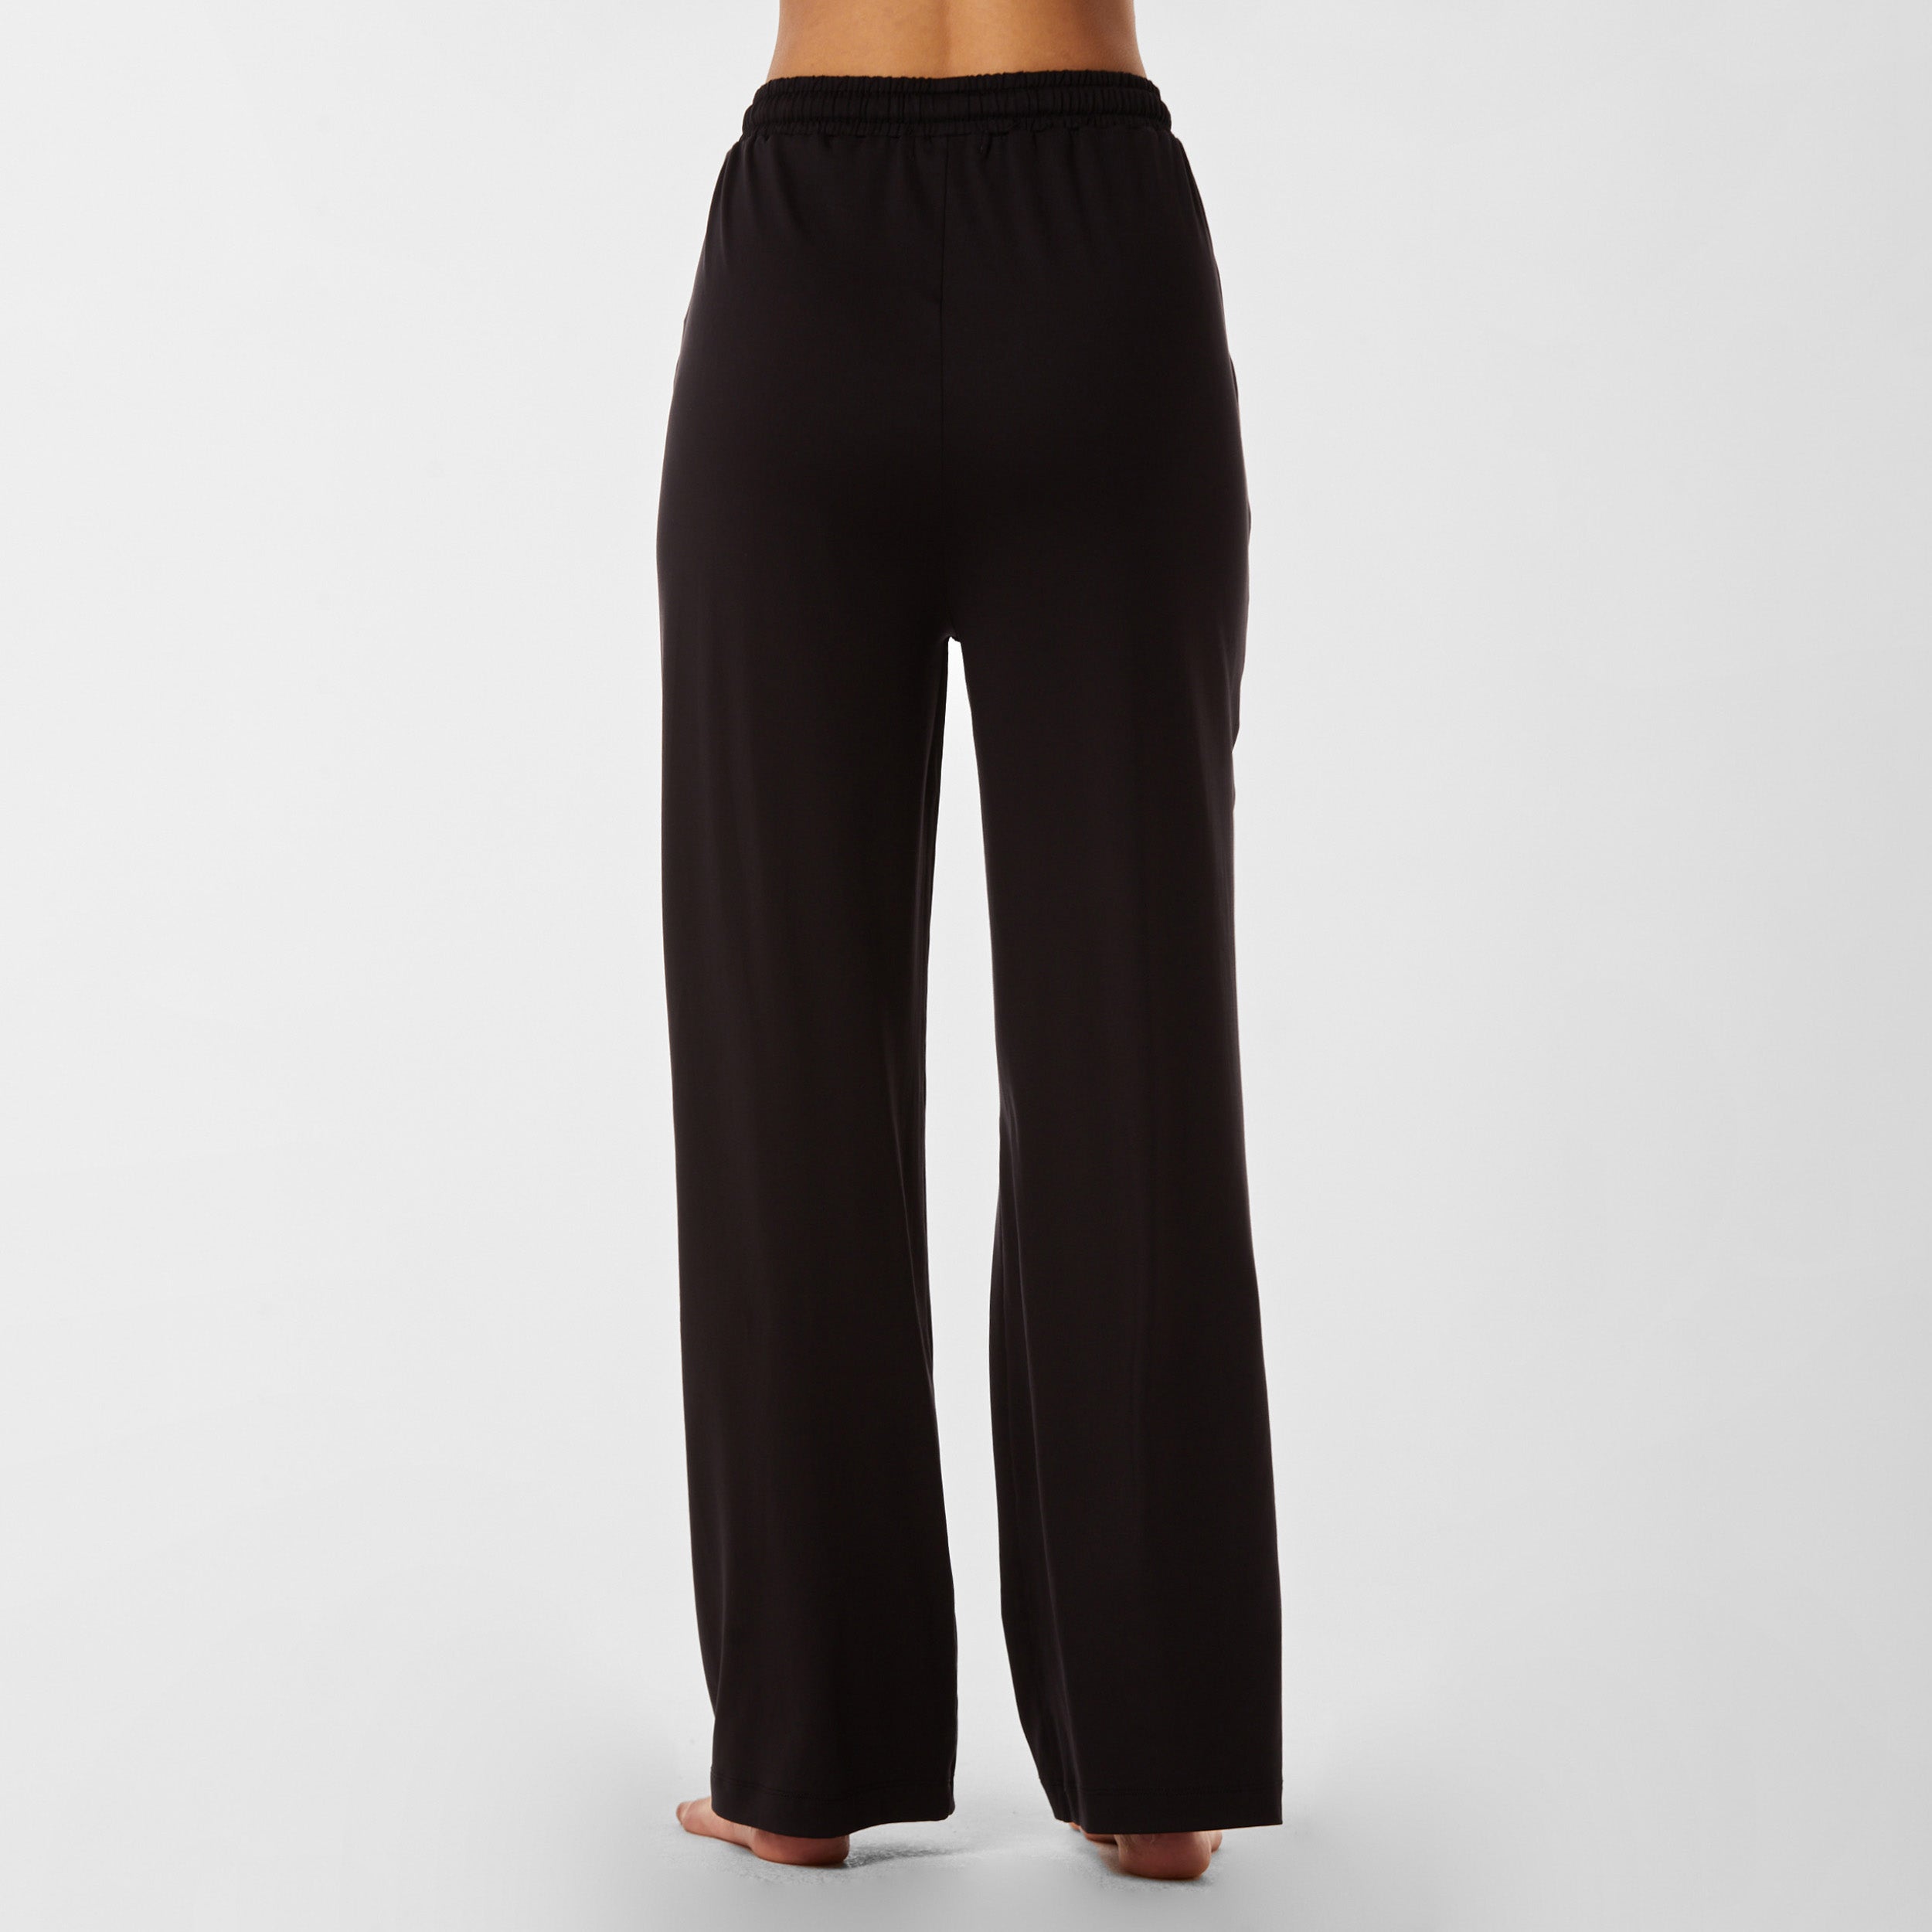 Rear view of soft black pajama pant